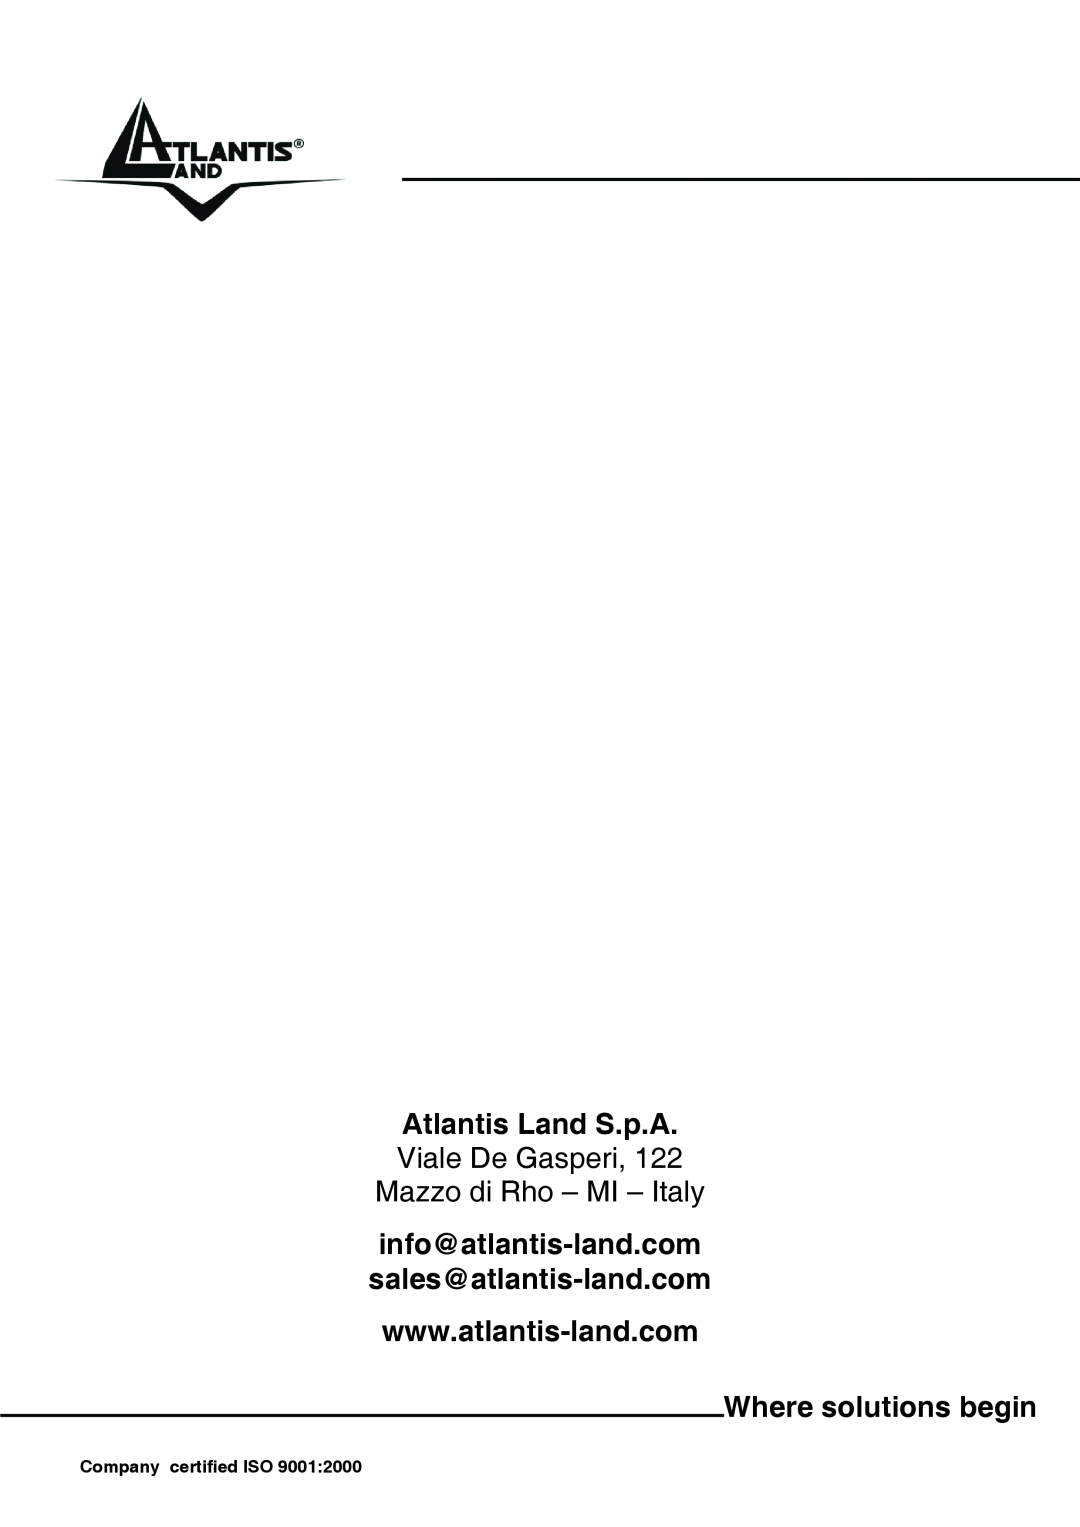 Atlantis Land A01-IU1 manual Atlantis Land S.p.A, Viale De Gasperi Mazzo di Rho - MI - Italy, Where solutions begin 